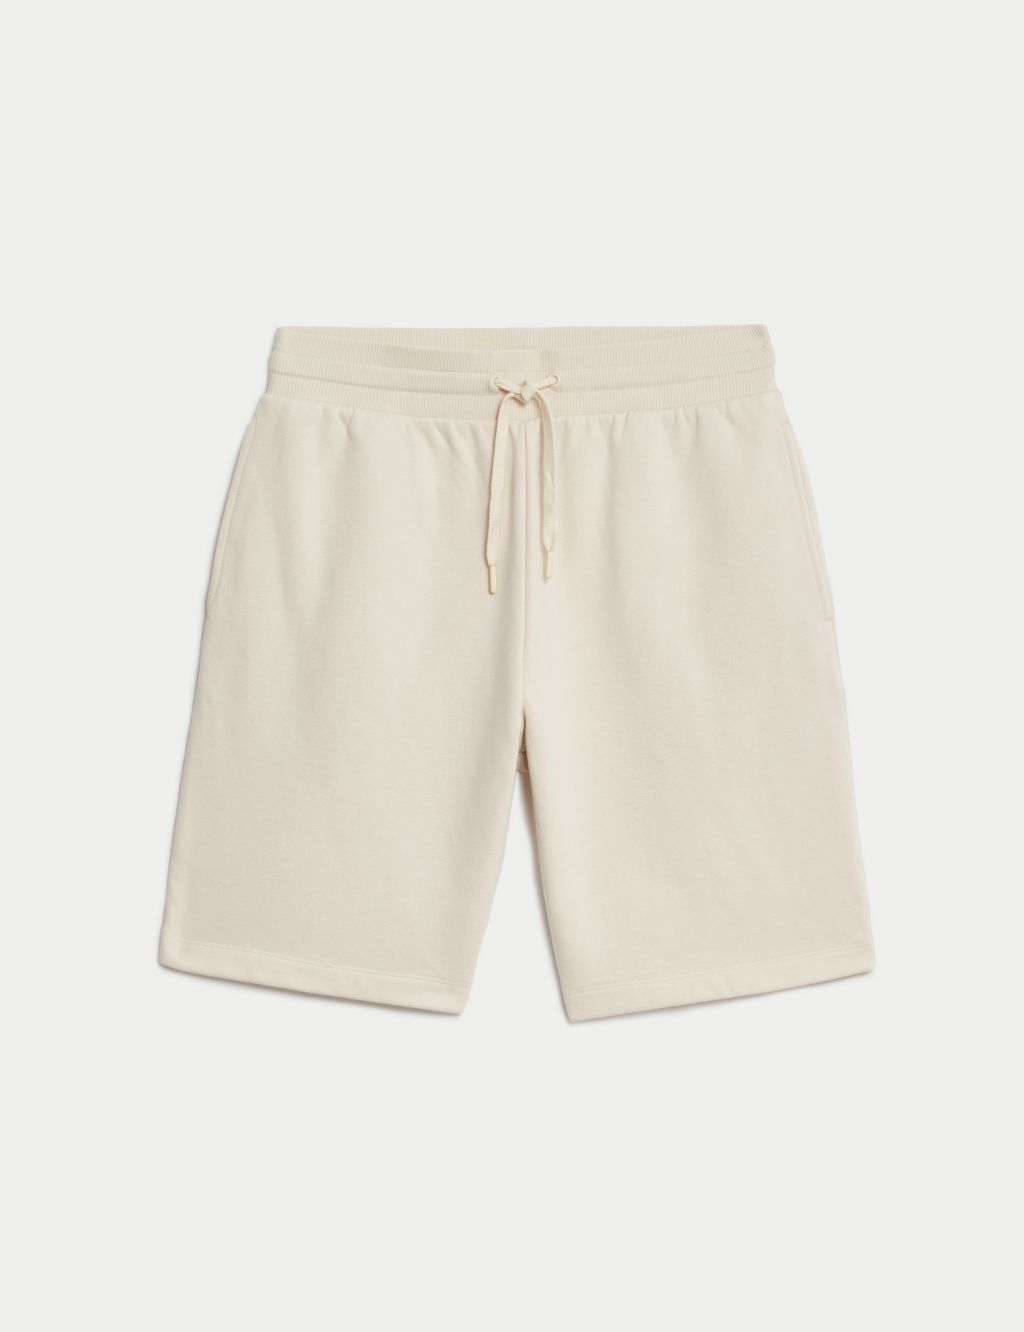 Cotton Rich Oversized Jersey Shorts image 2